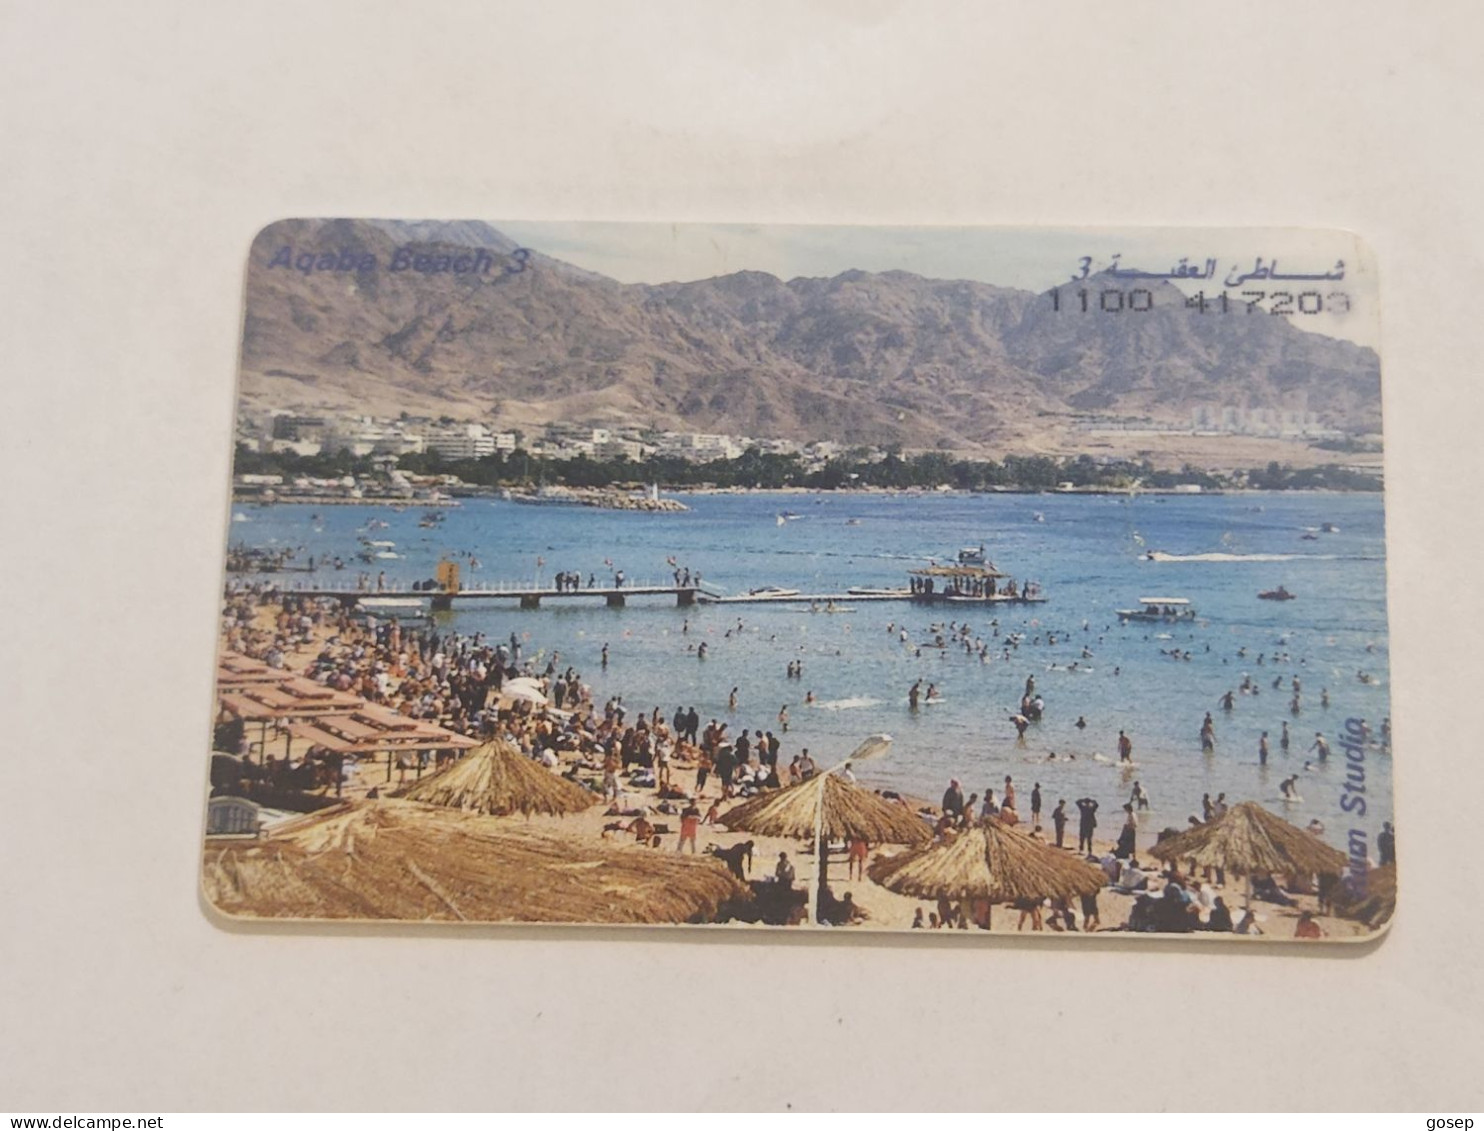 JORDAN-(JO-ALO-0027)-Aqaba Beach-(121)-(1100-417203)-(3JD)-(9/2000)-used Card+1card Prepiad Free - Jordanië